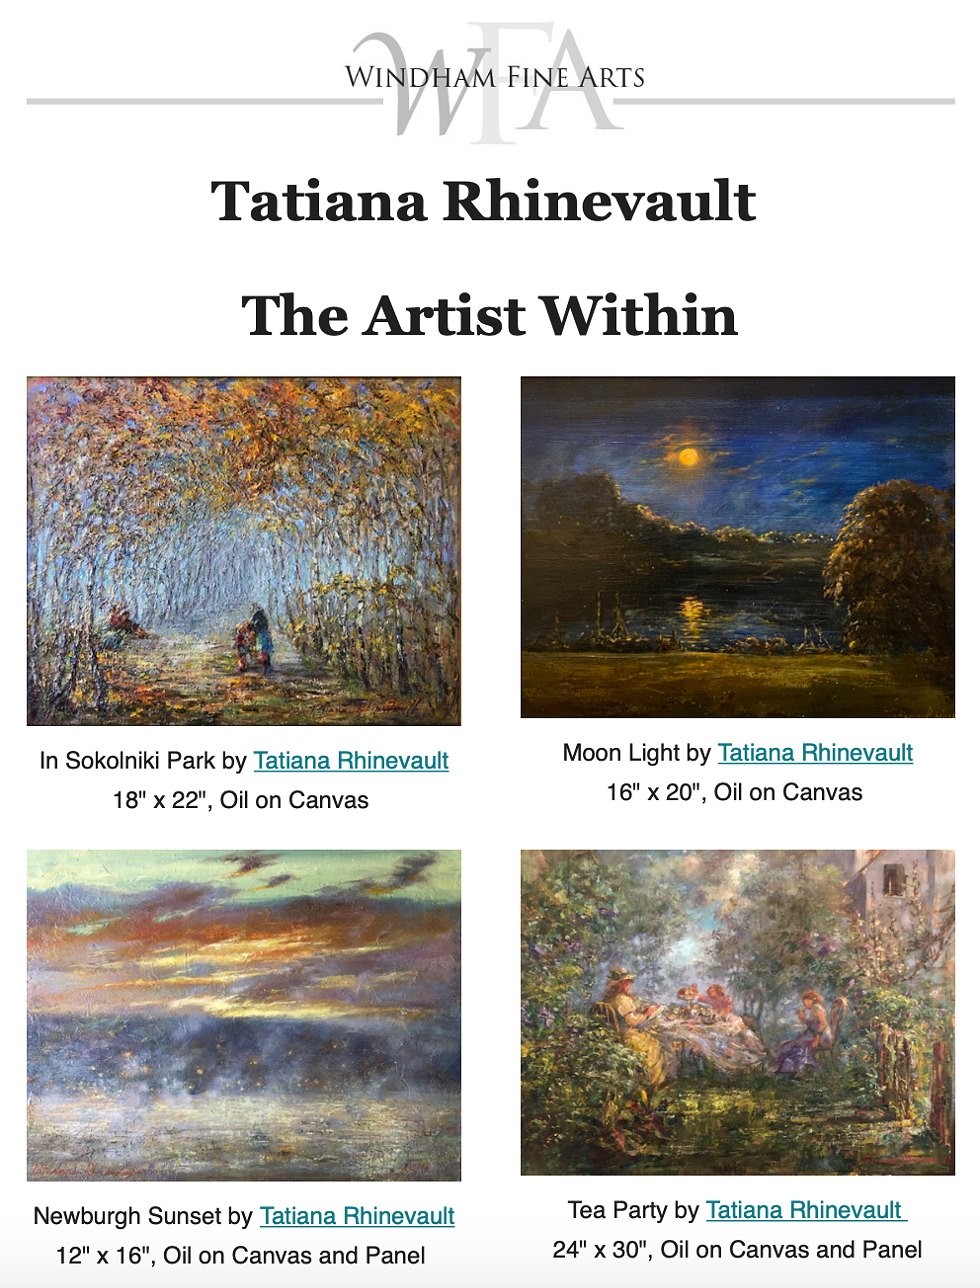 Tatiana Rhinevault: The Artist Within